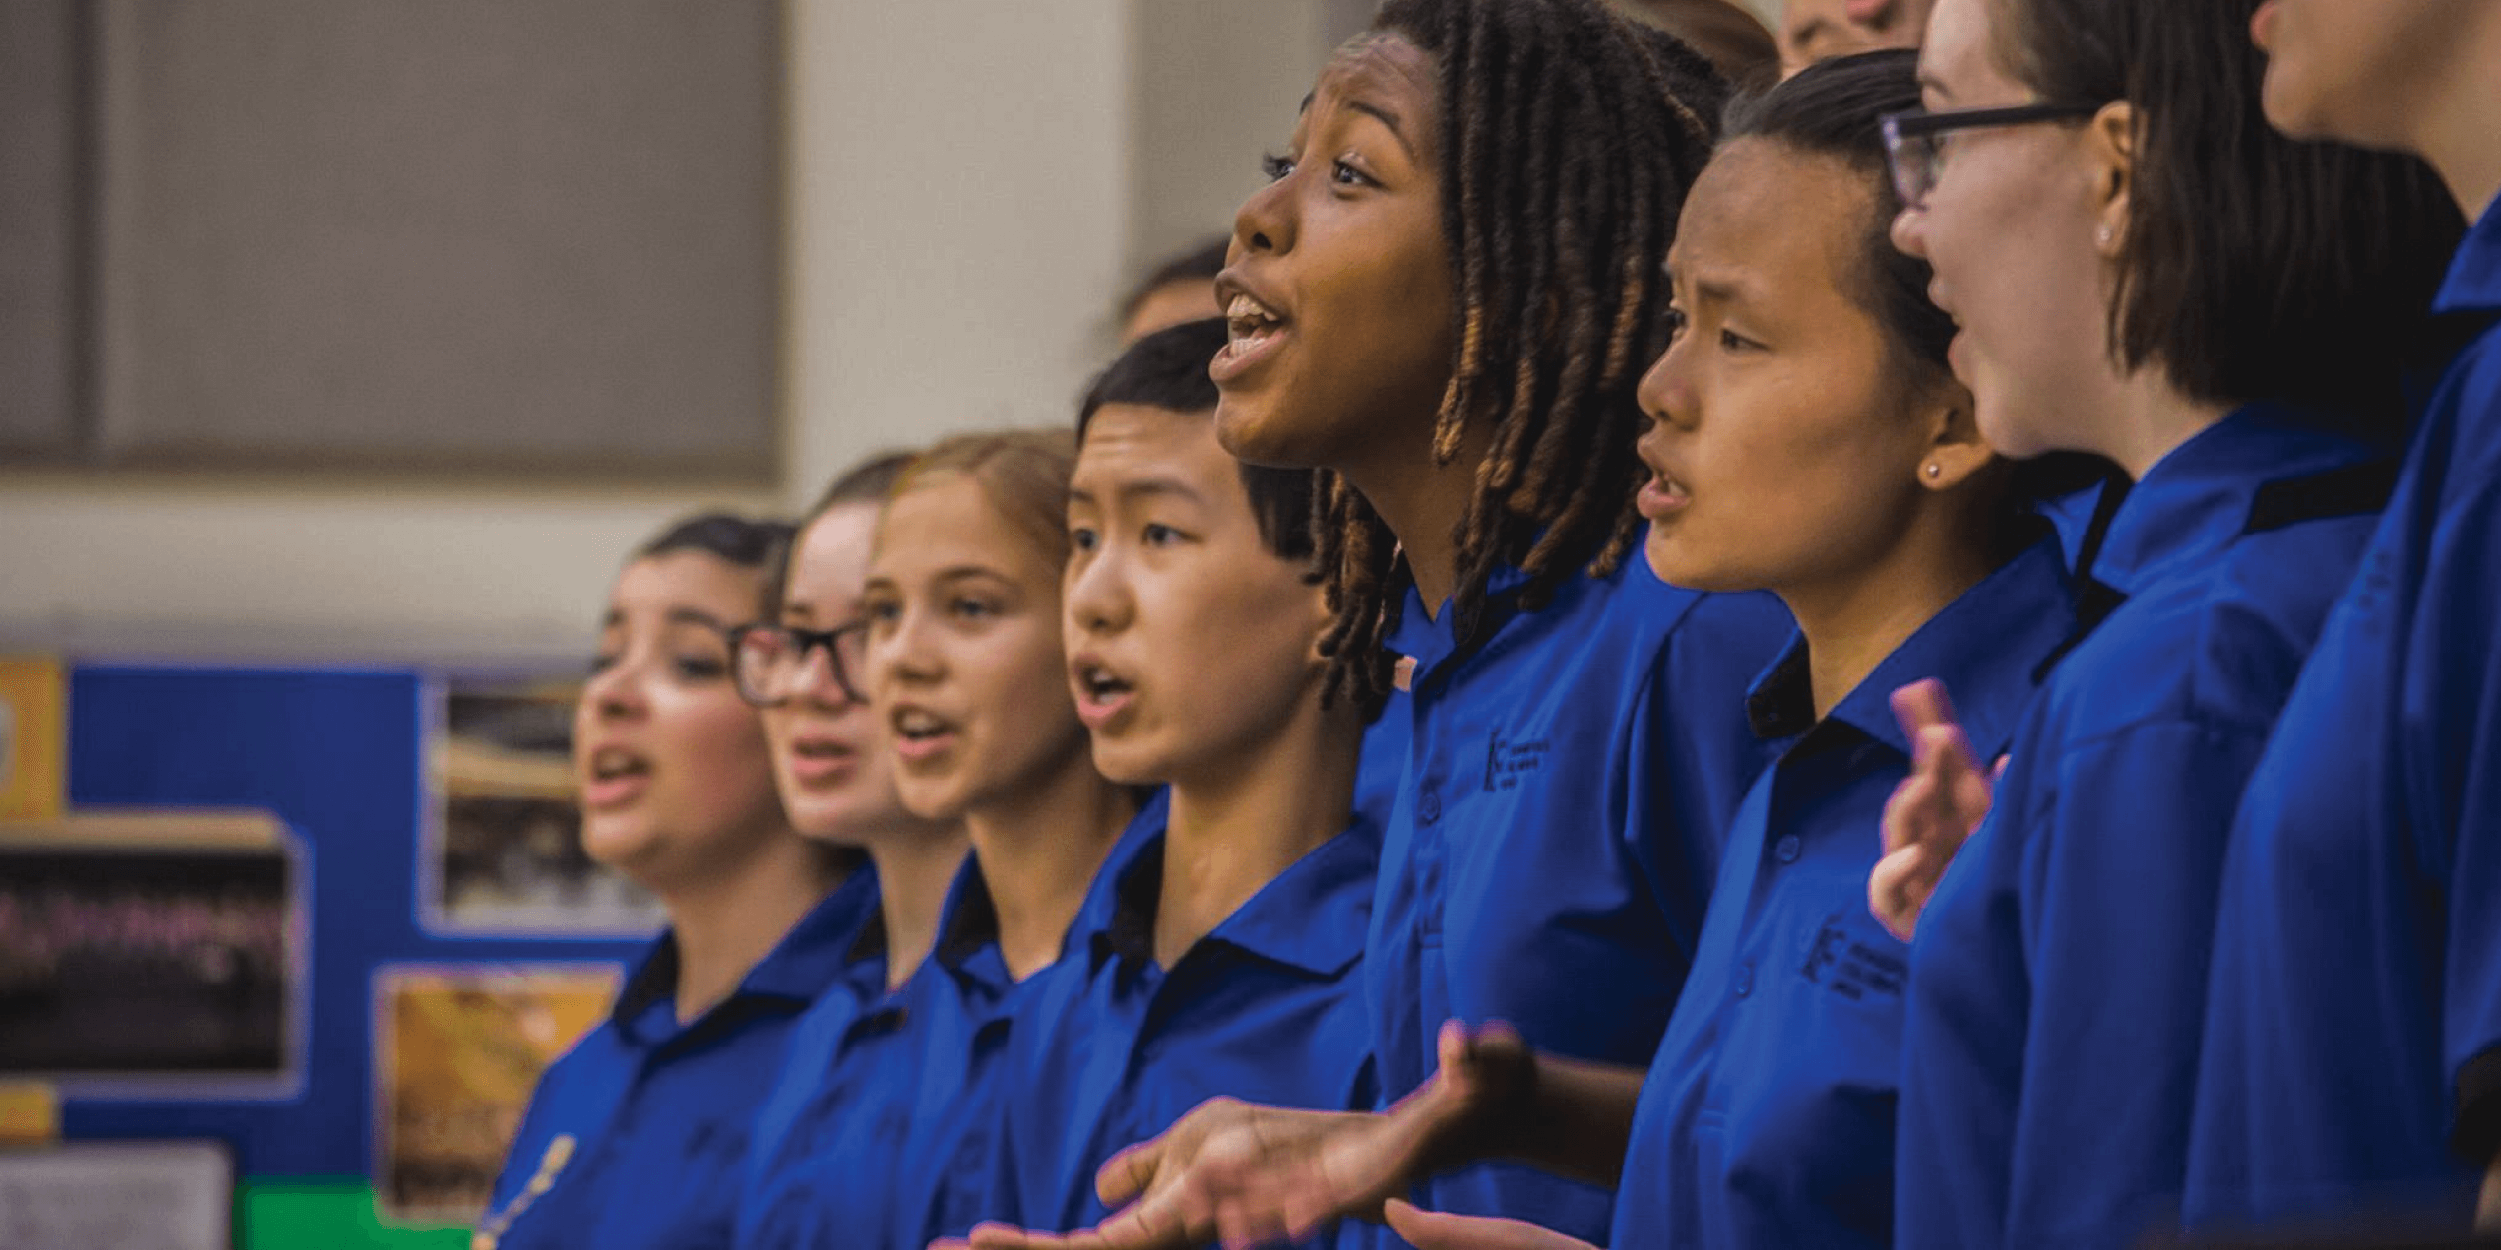 Indianapolis Children’s Choir